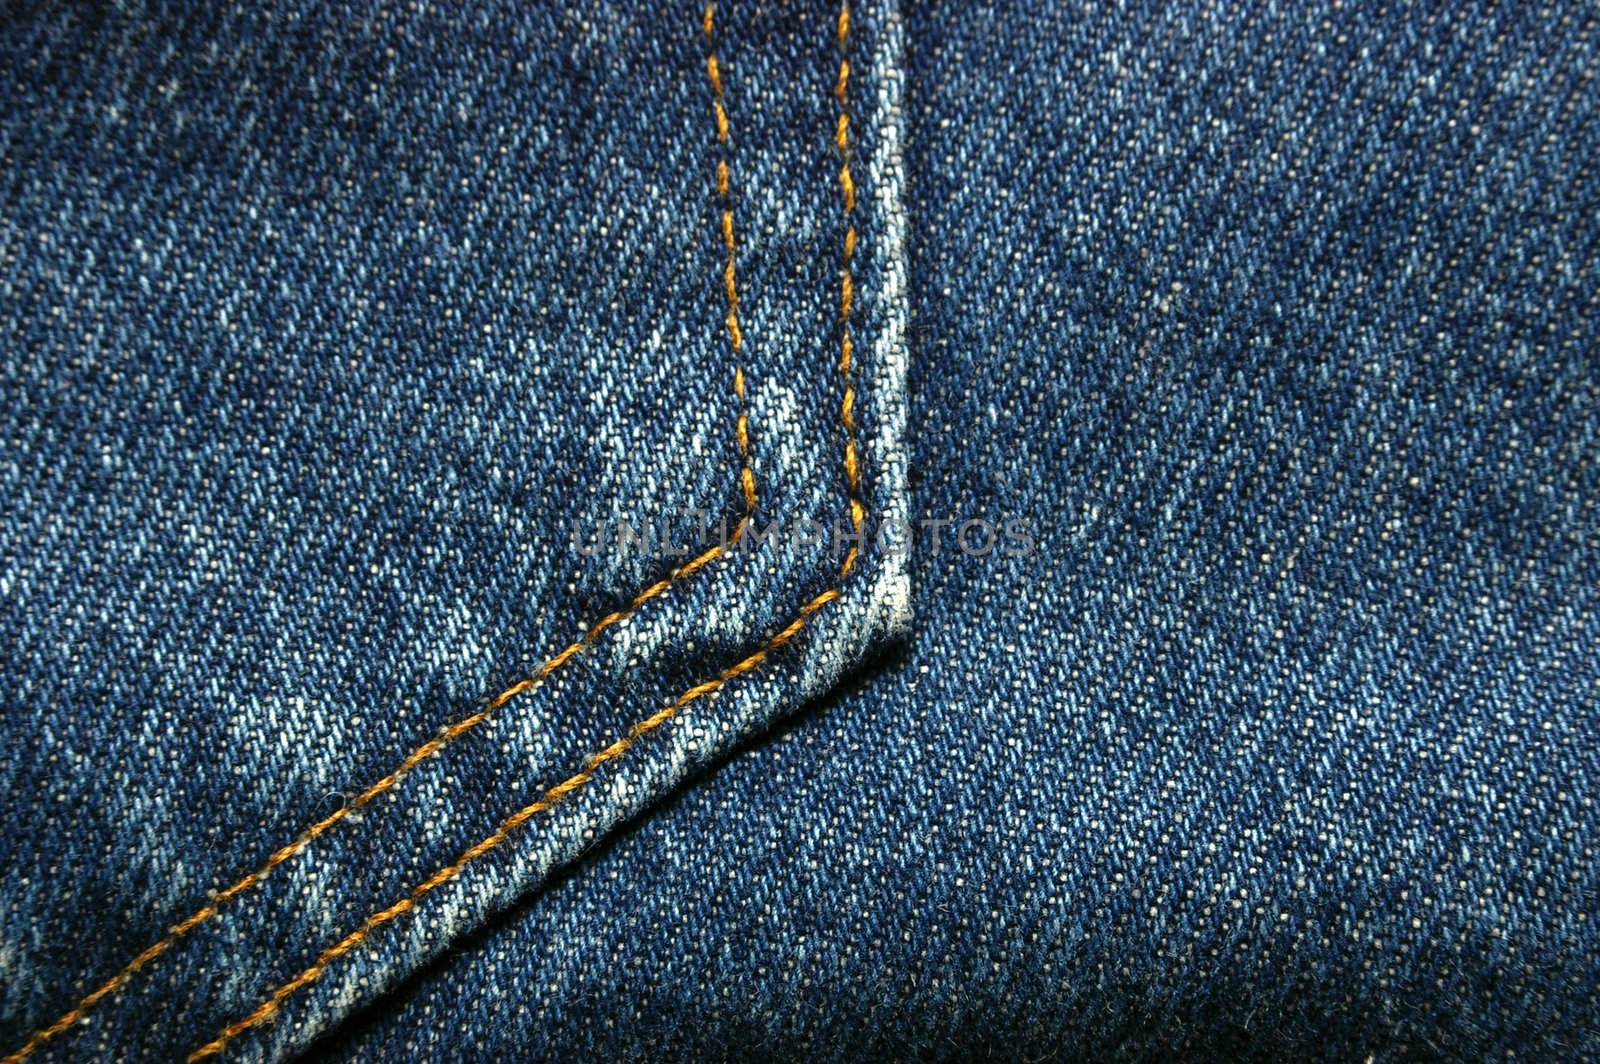 Jean or Denim Fabric by thomasw